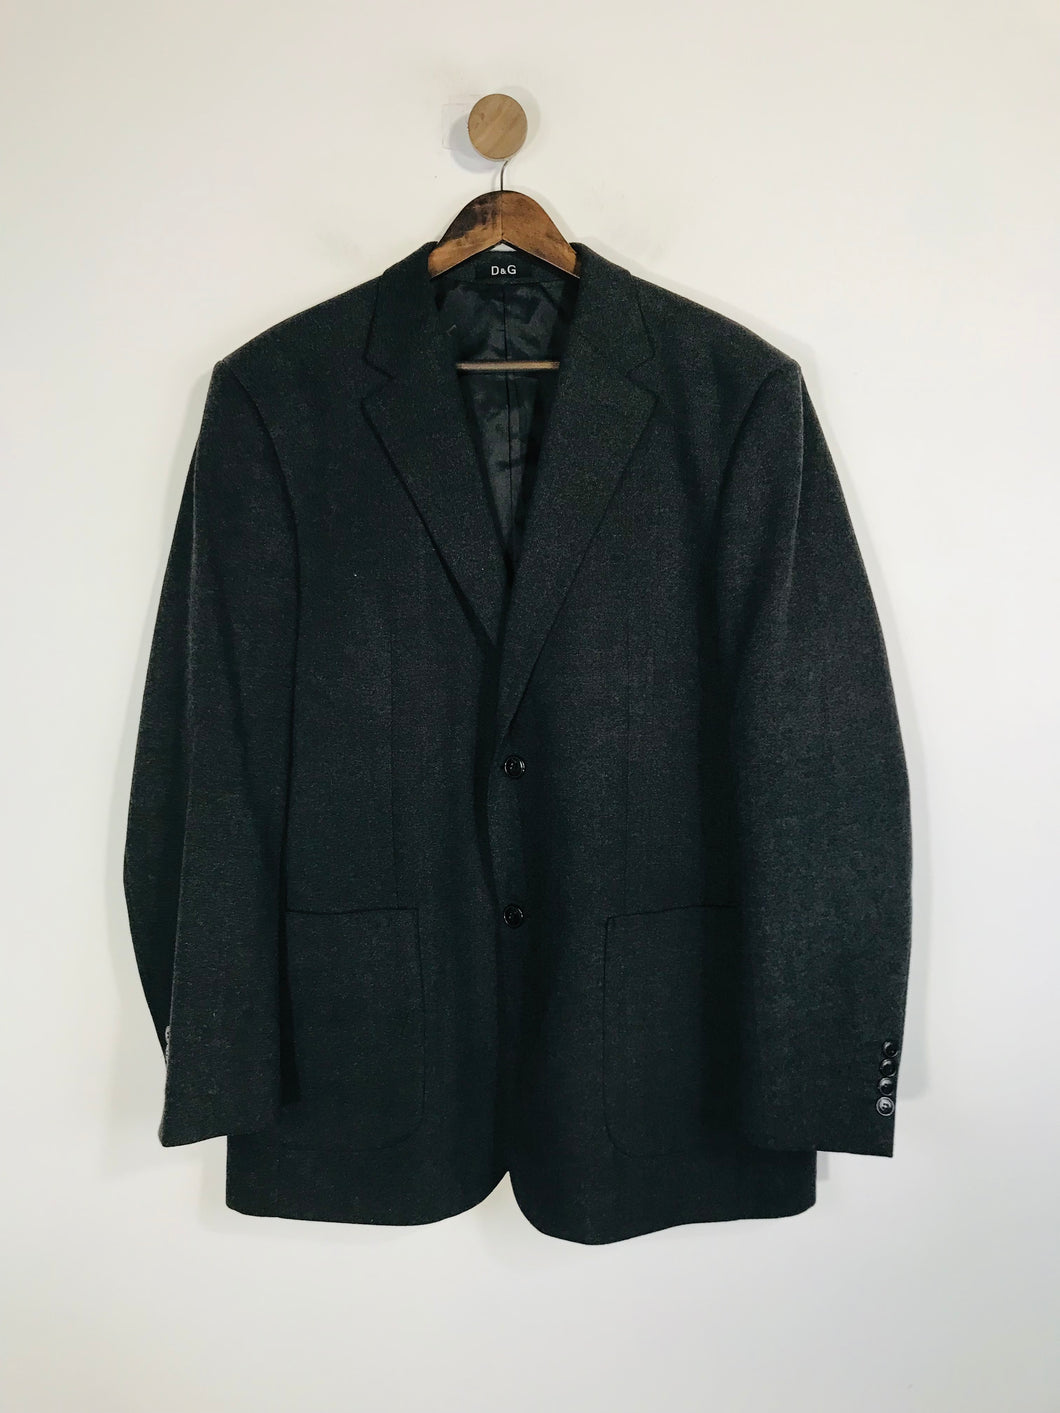 Dolce & Gabbana Men's Smart Suit Blazer Jacket | 54 | Black